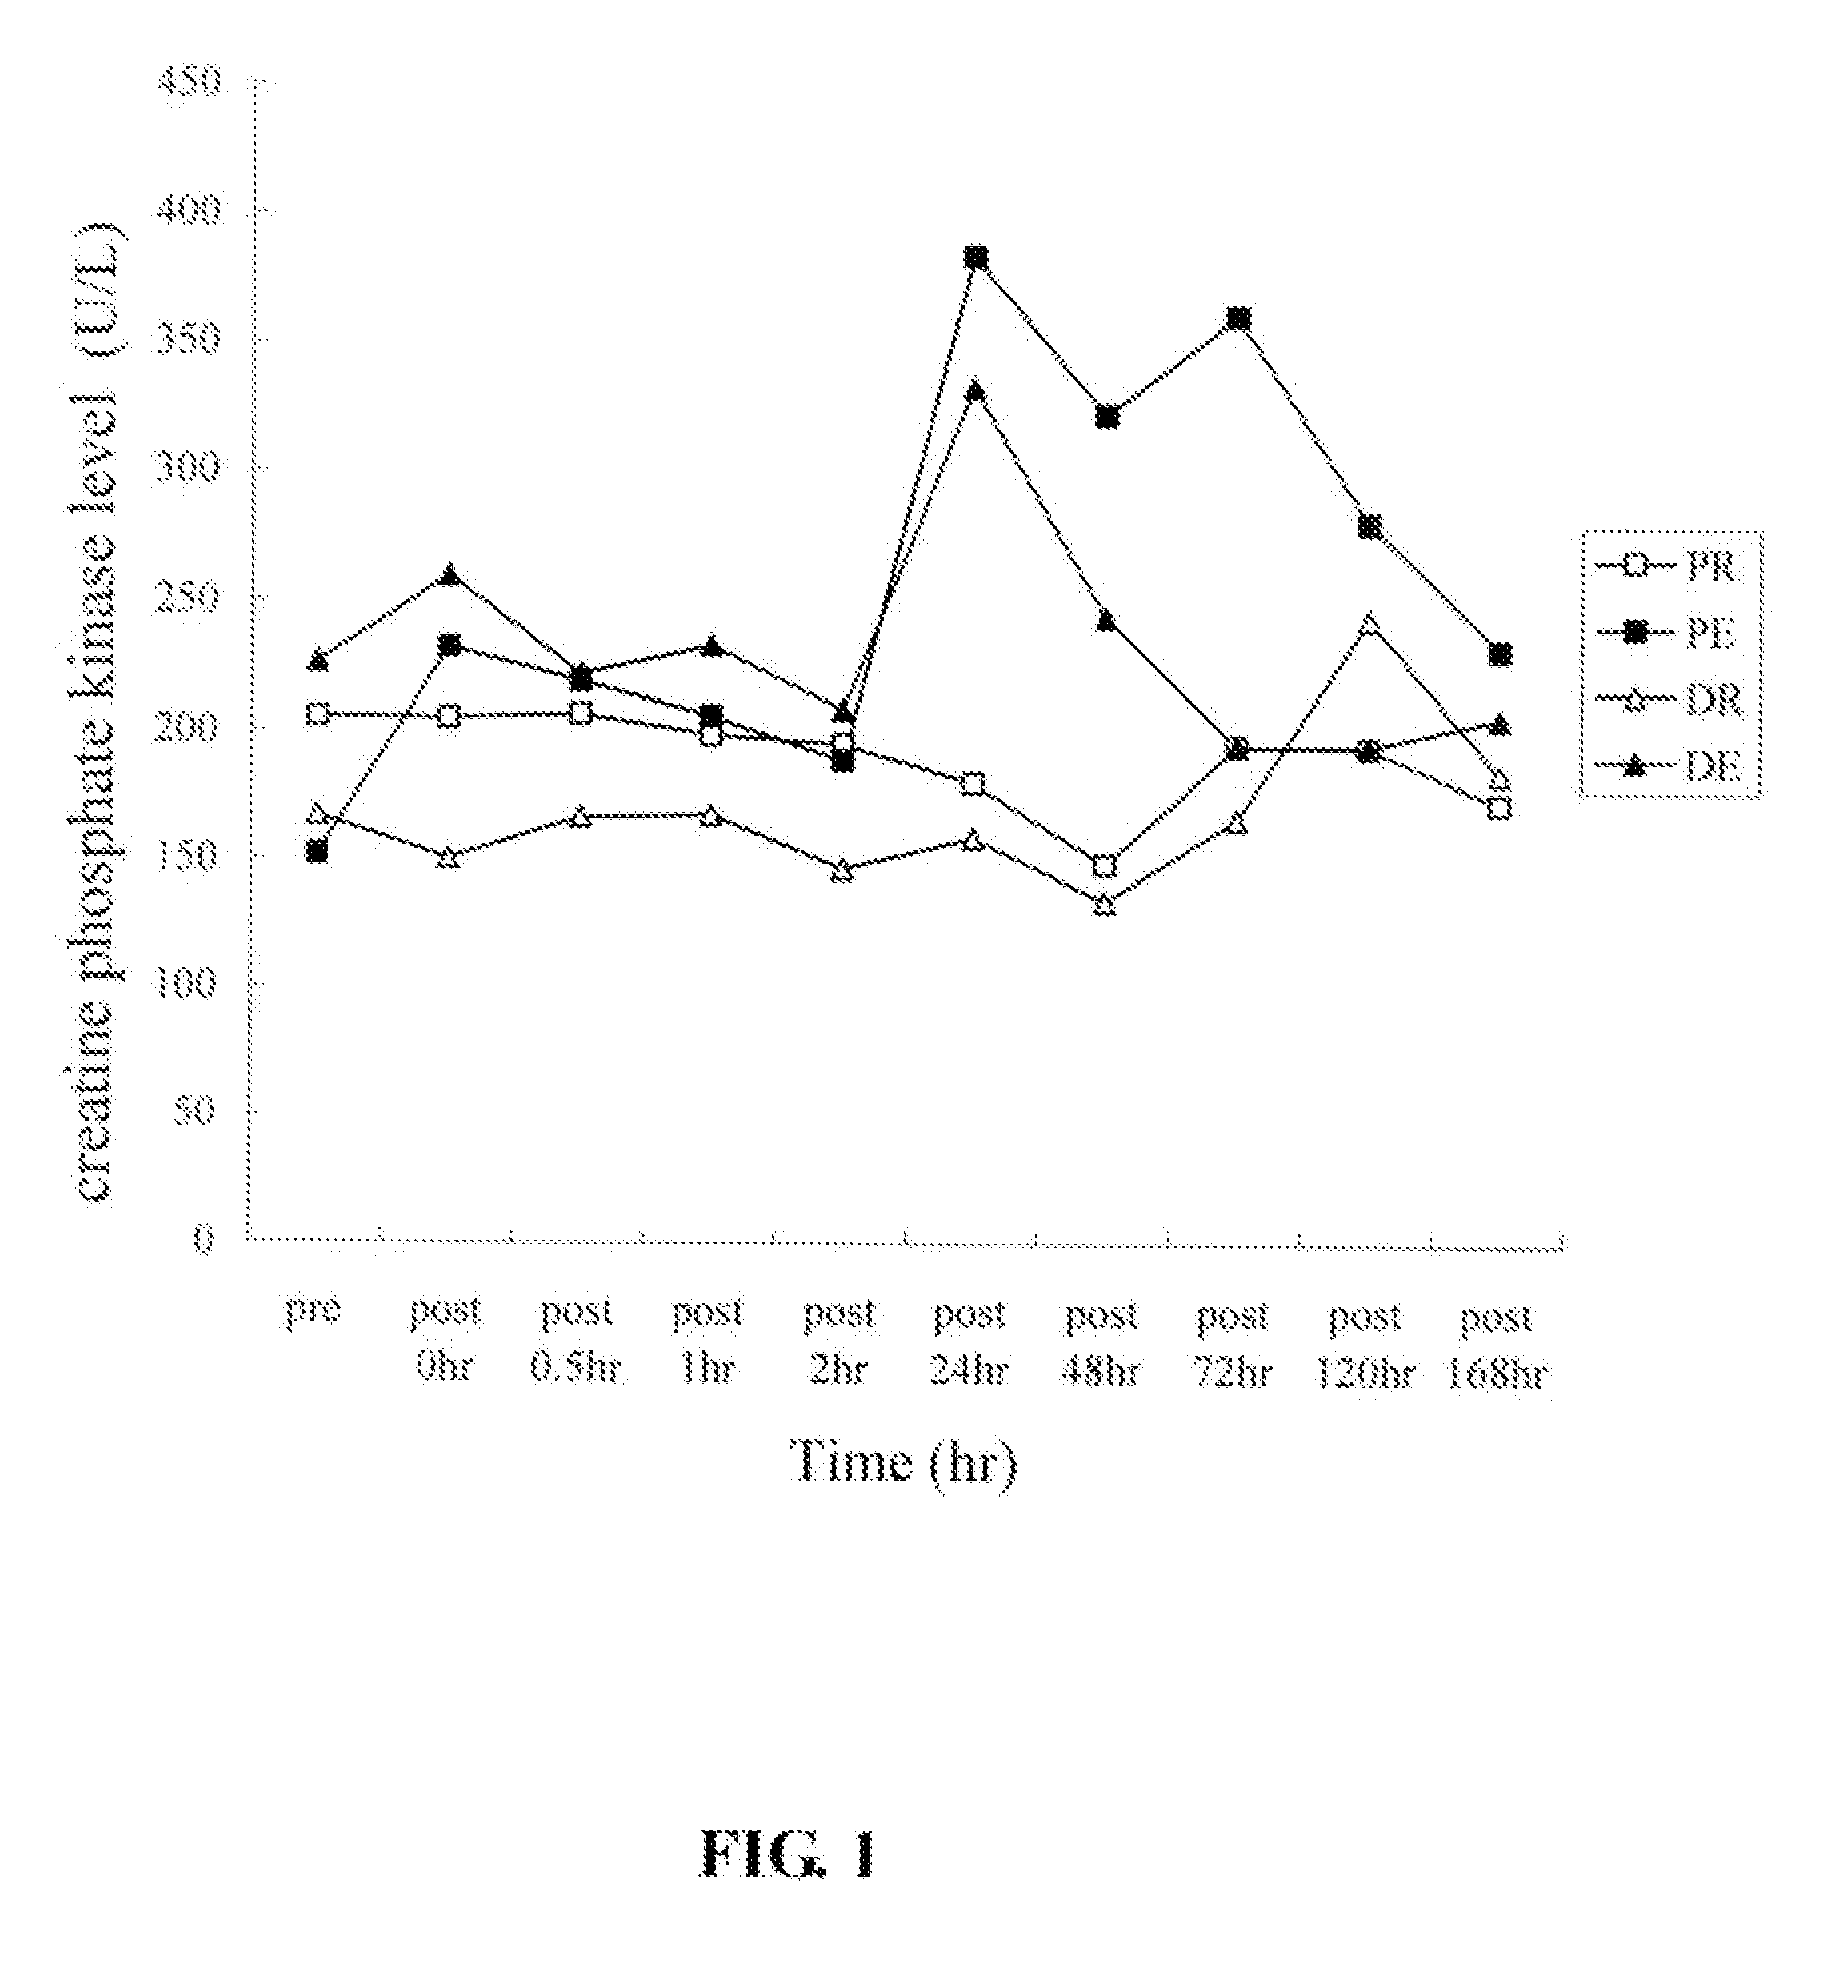 Anti-fatigue cyclohexenone compounds from antrodia camphorata